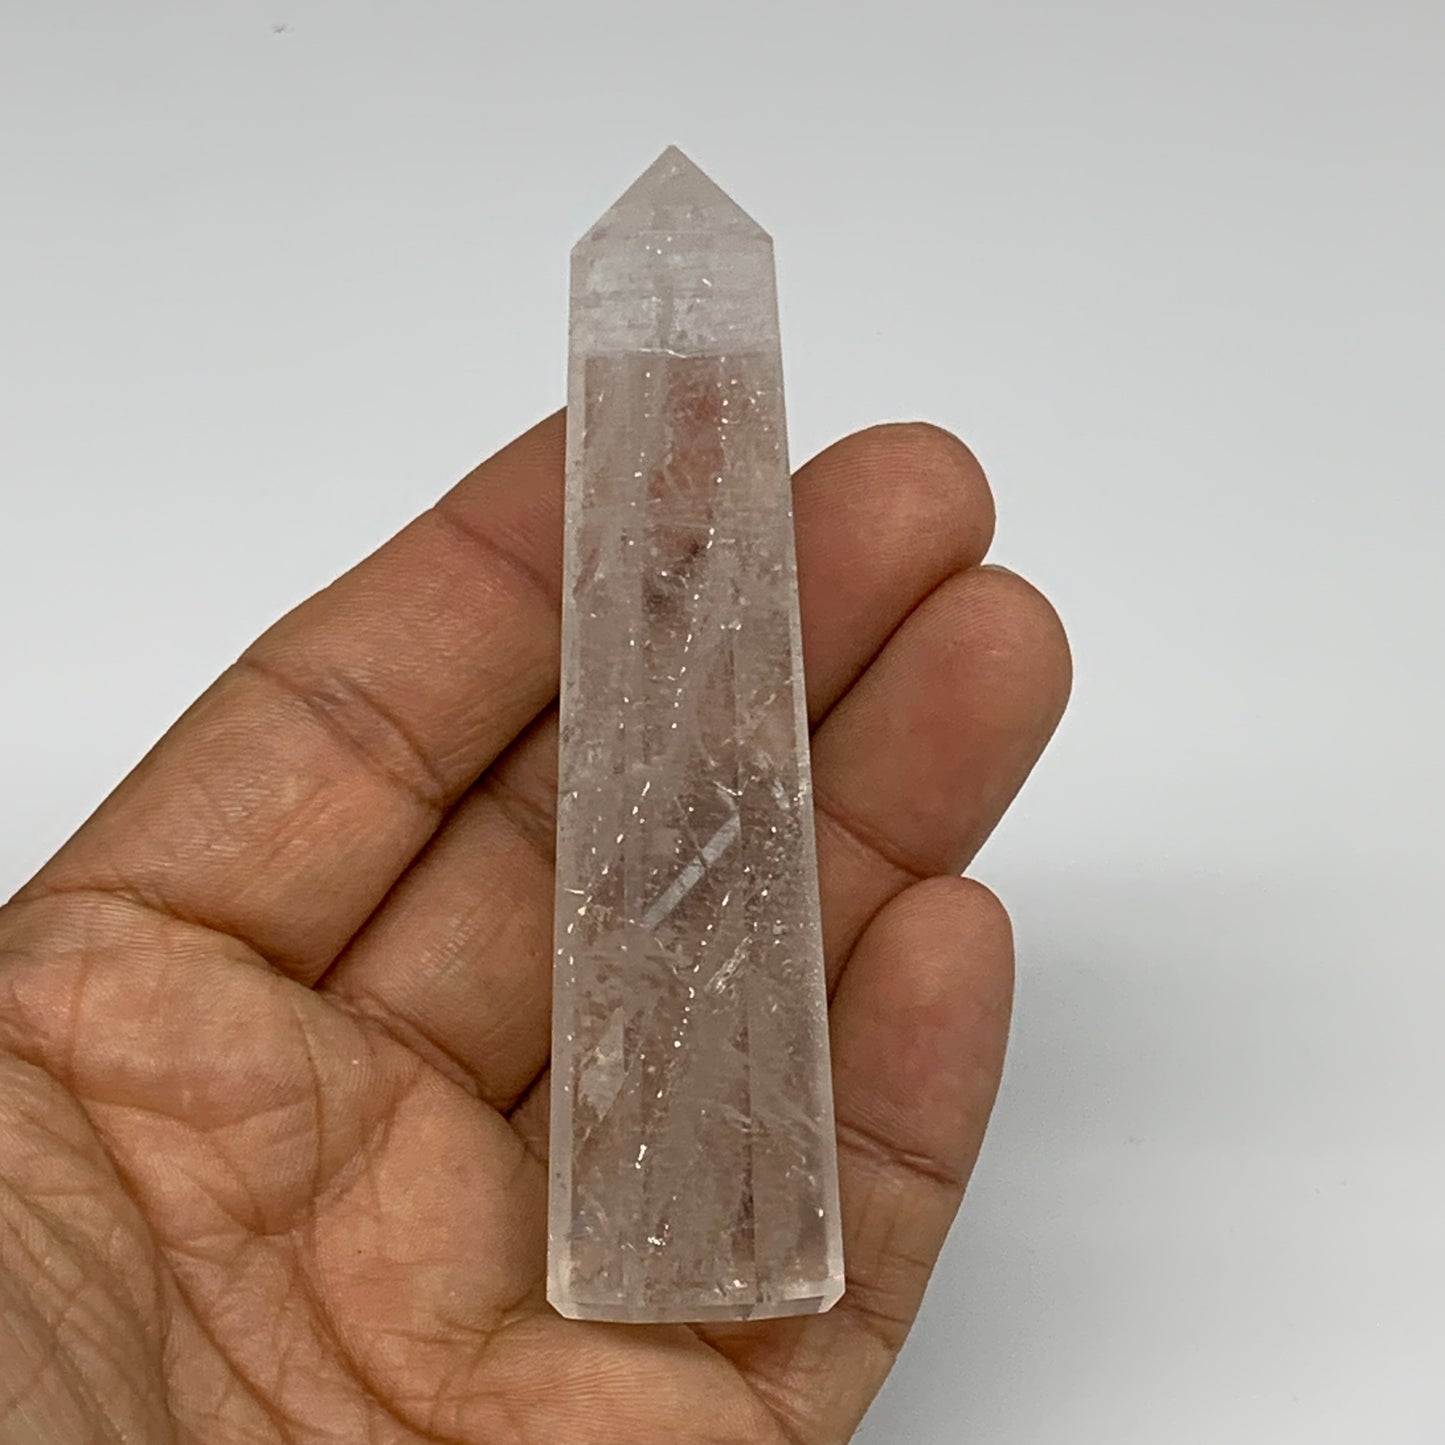 60.6g, 3.4"x0.8", Natural Quartz Crystal Tower Point Obelisk @India, B31360